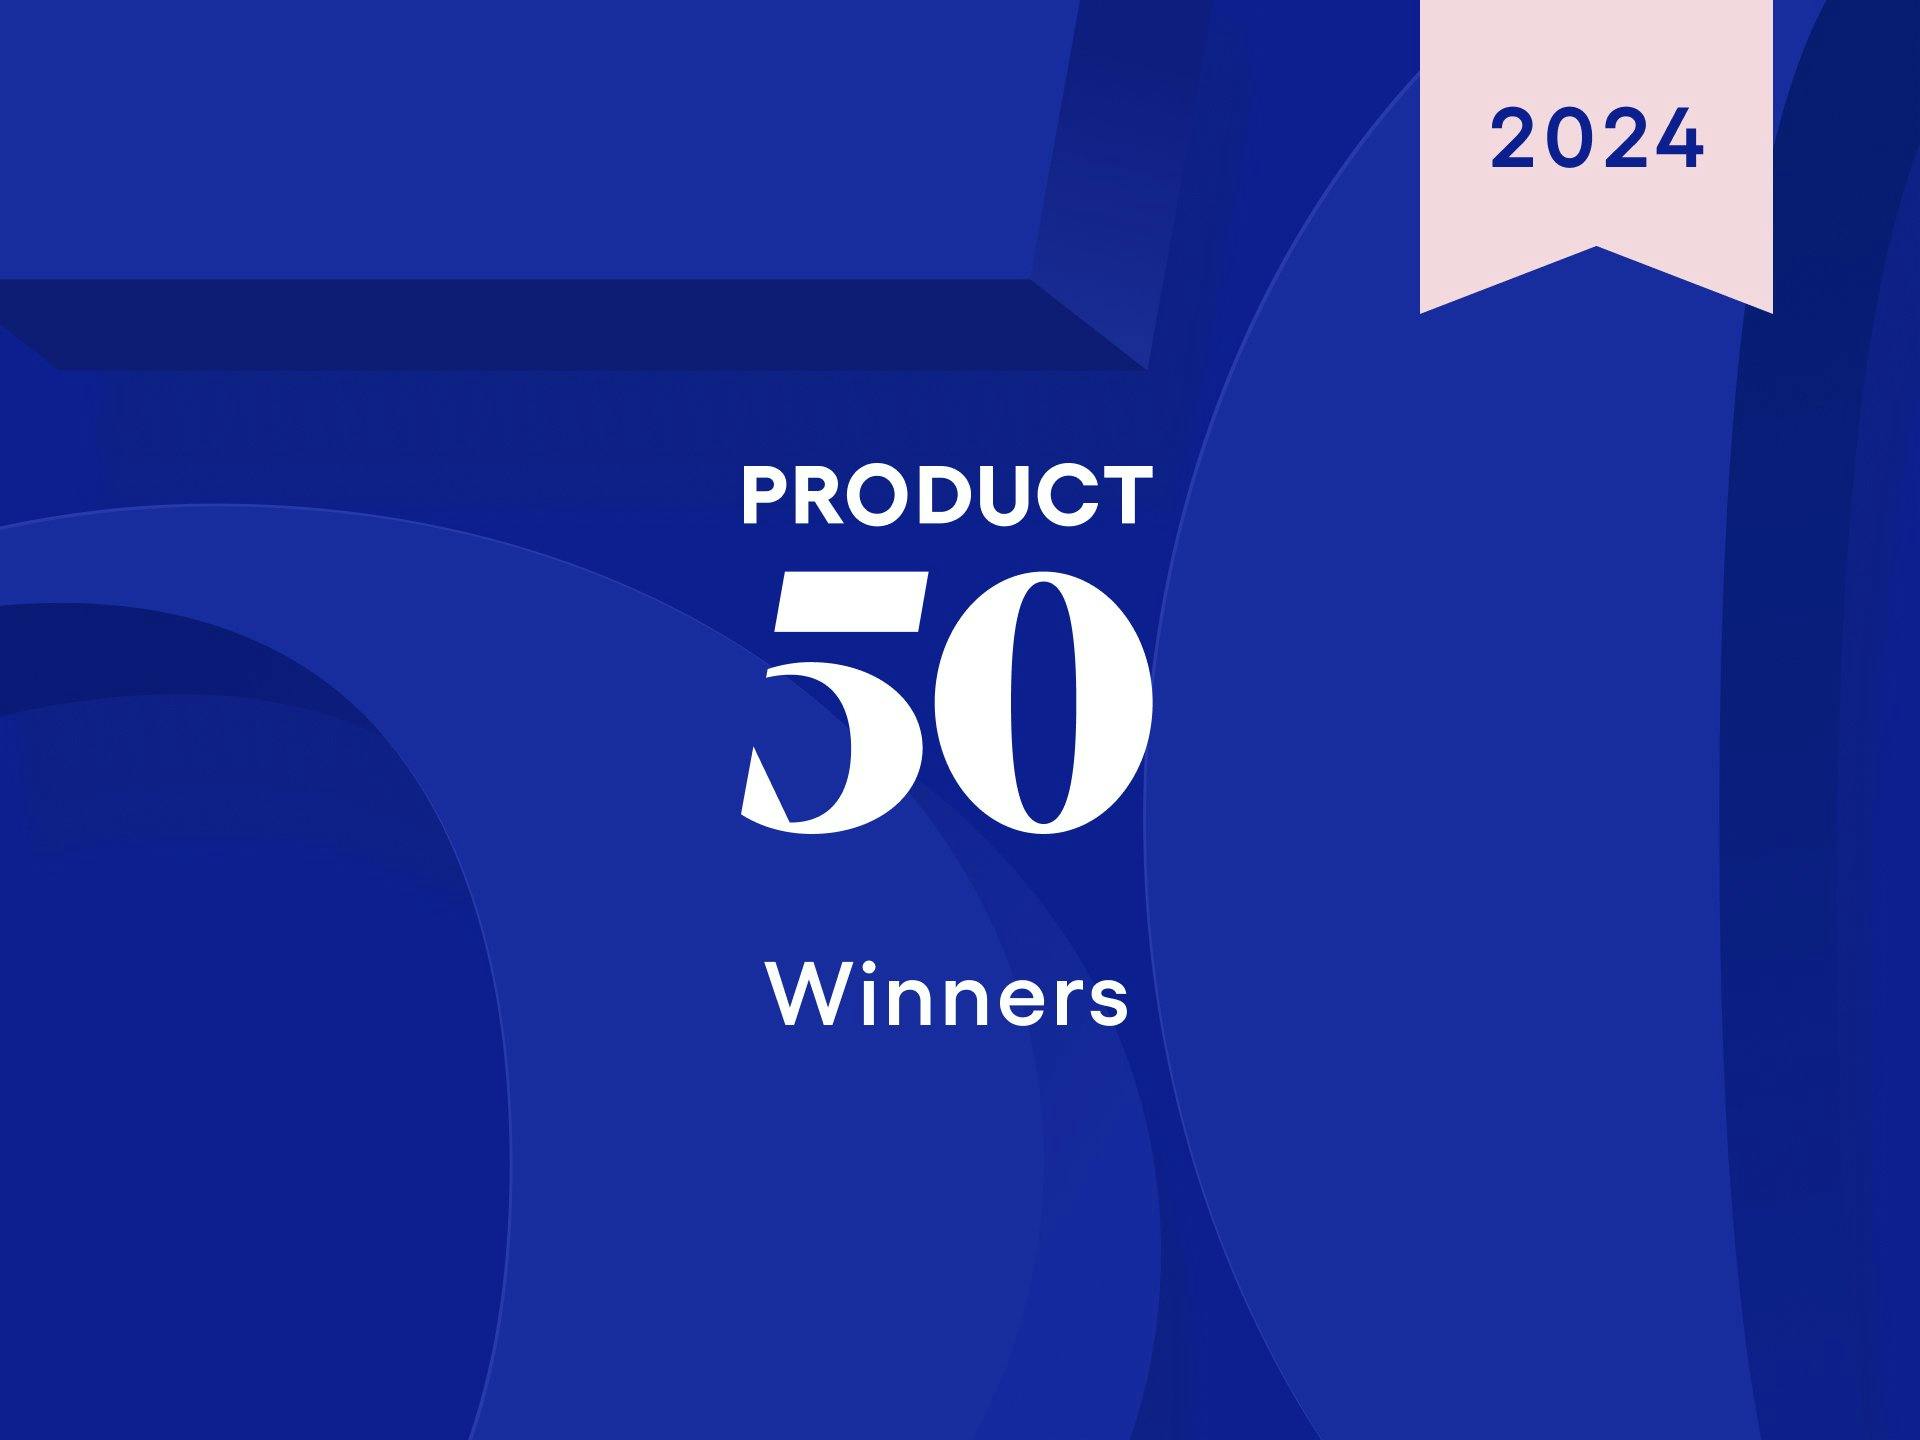 2024 Product 50 Winners